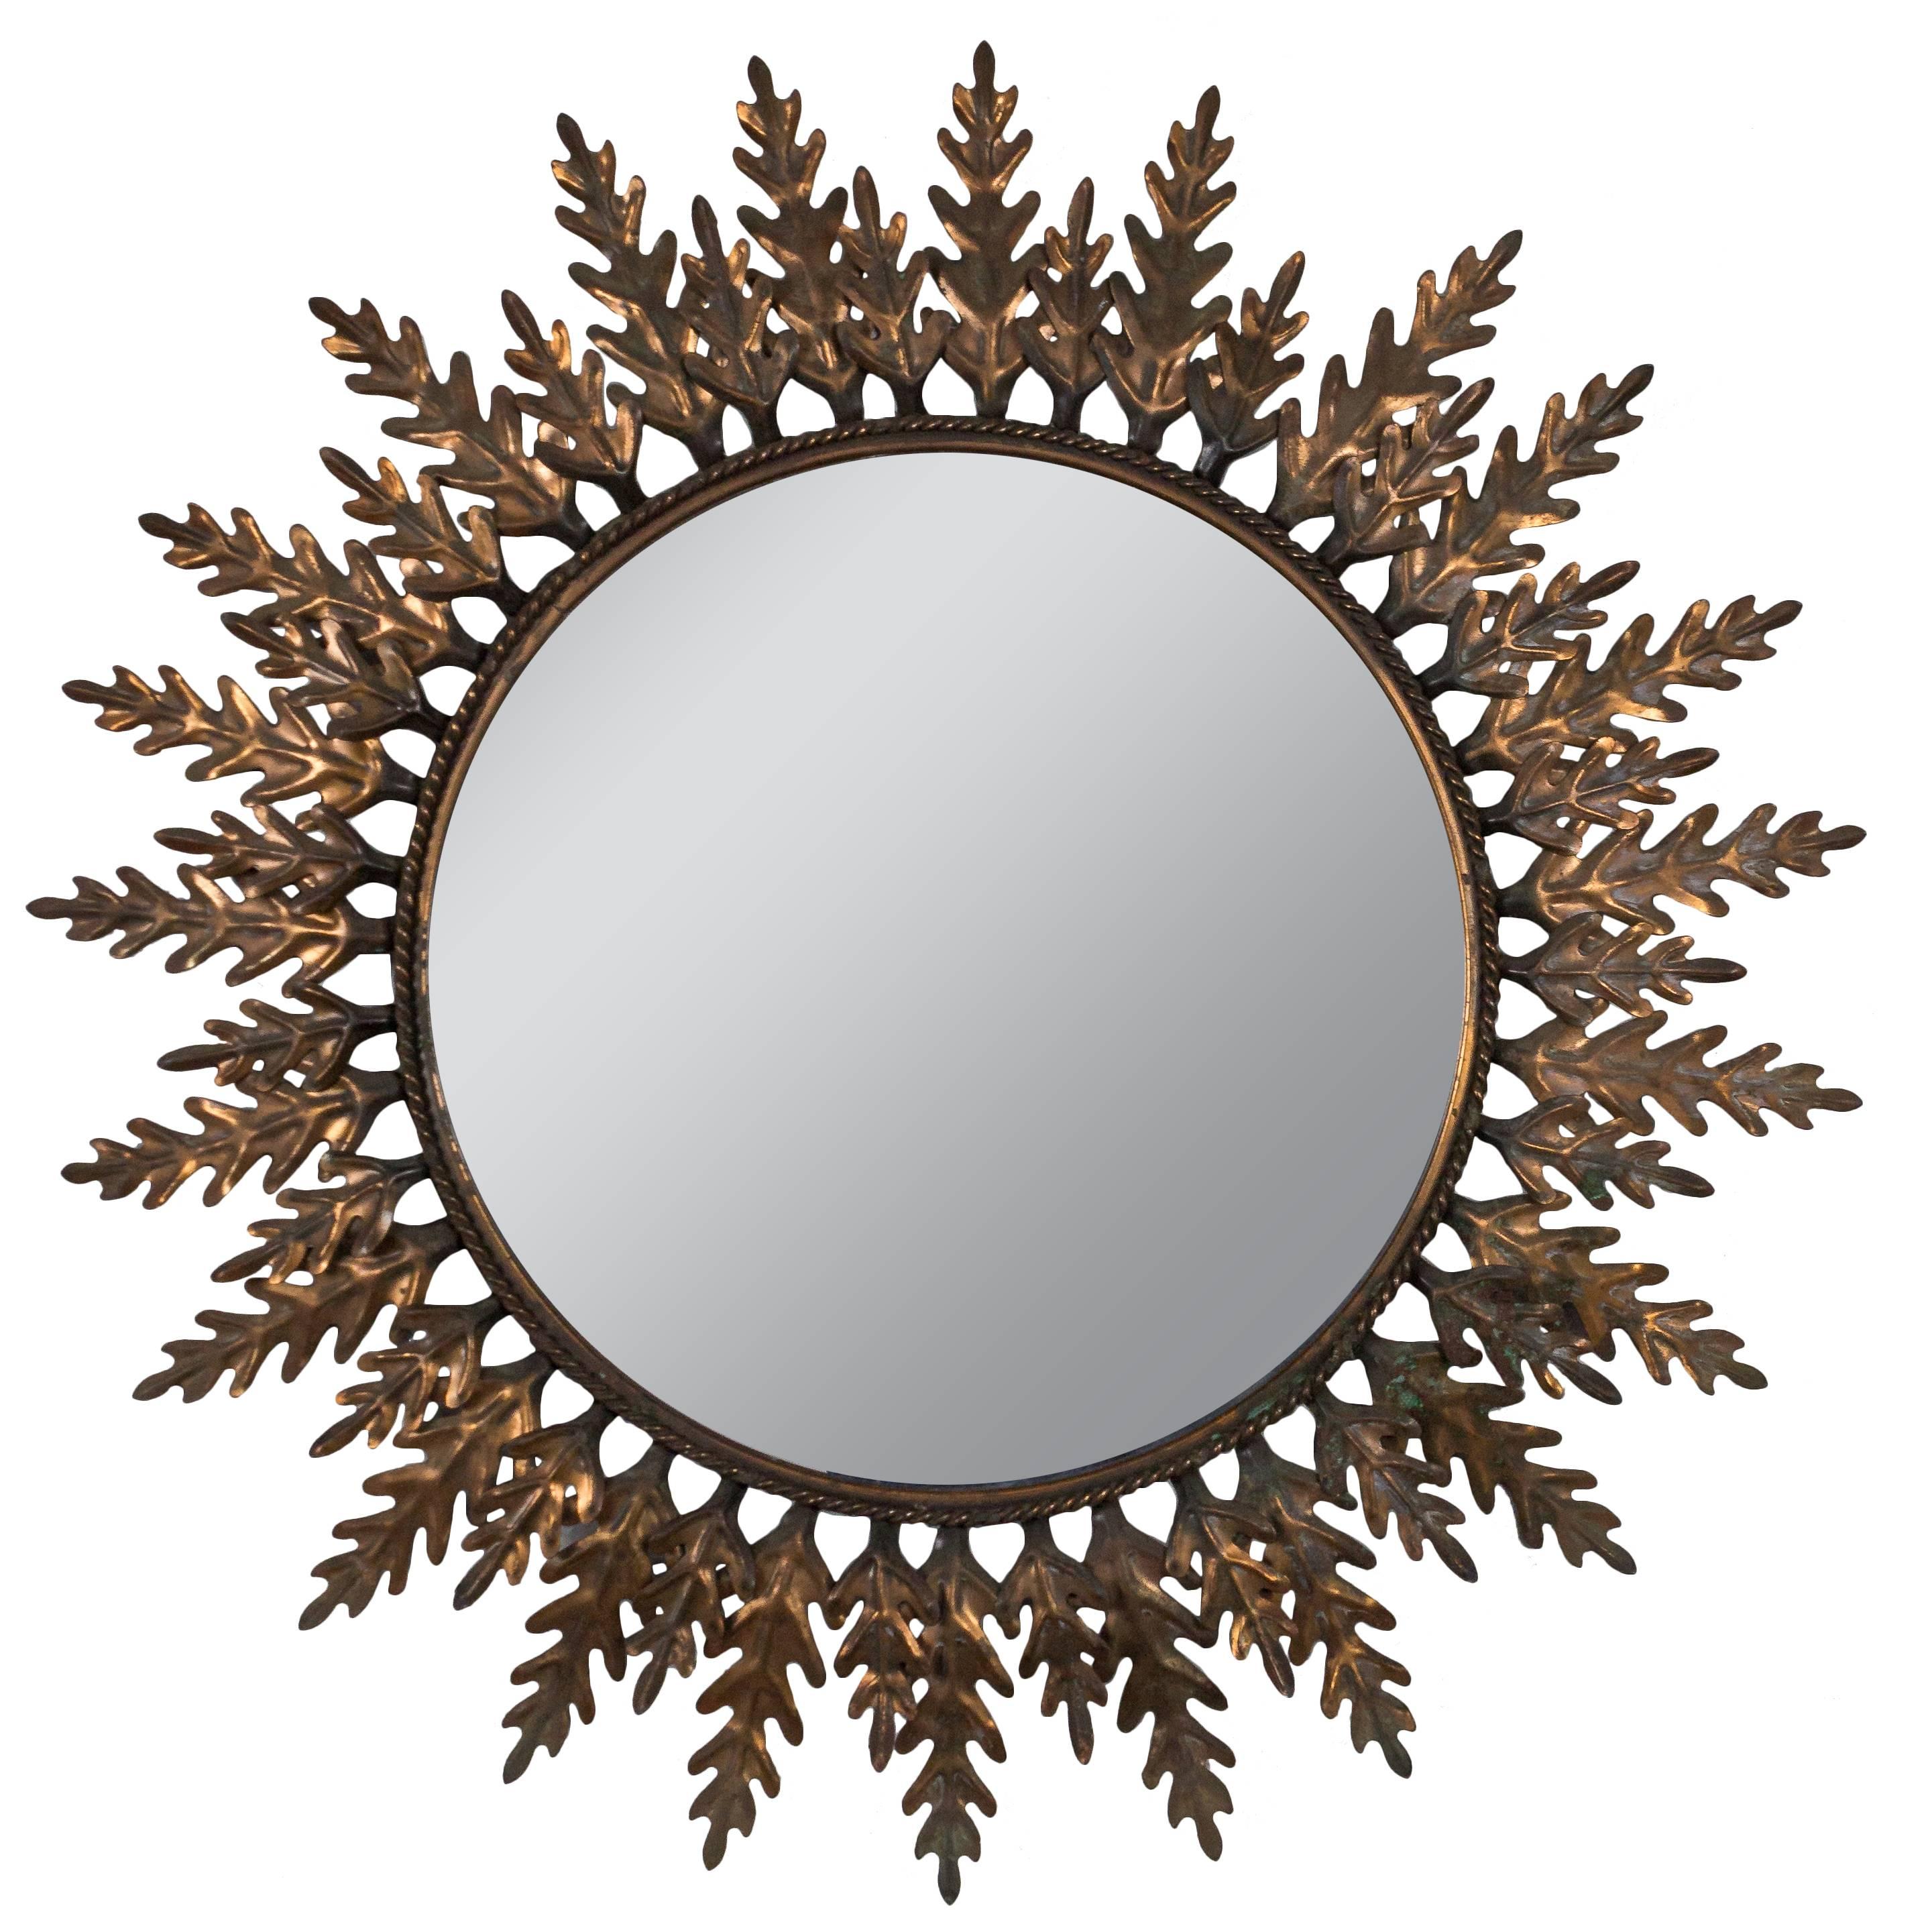 Copper-Plated Spanish Sunburst Mirror